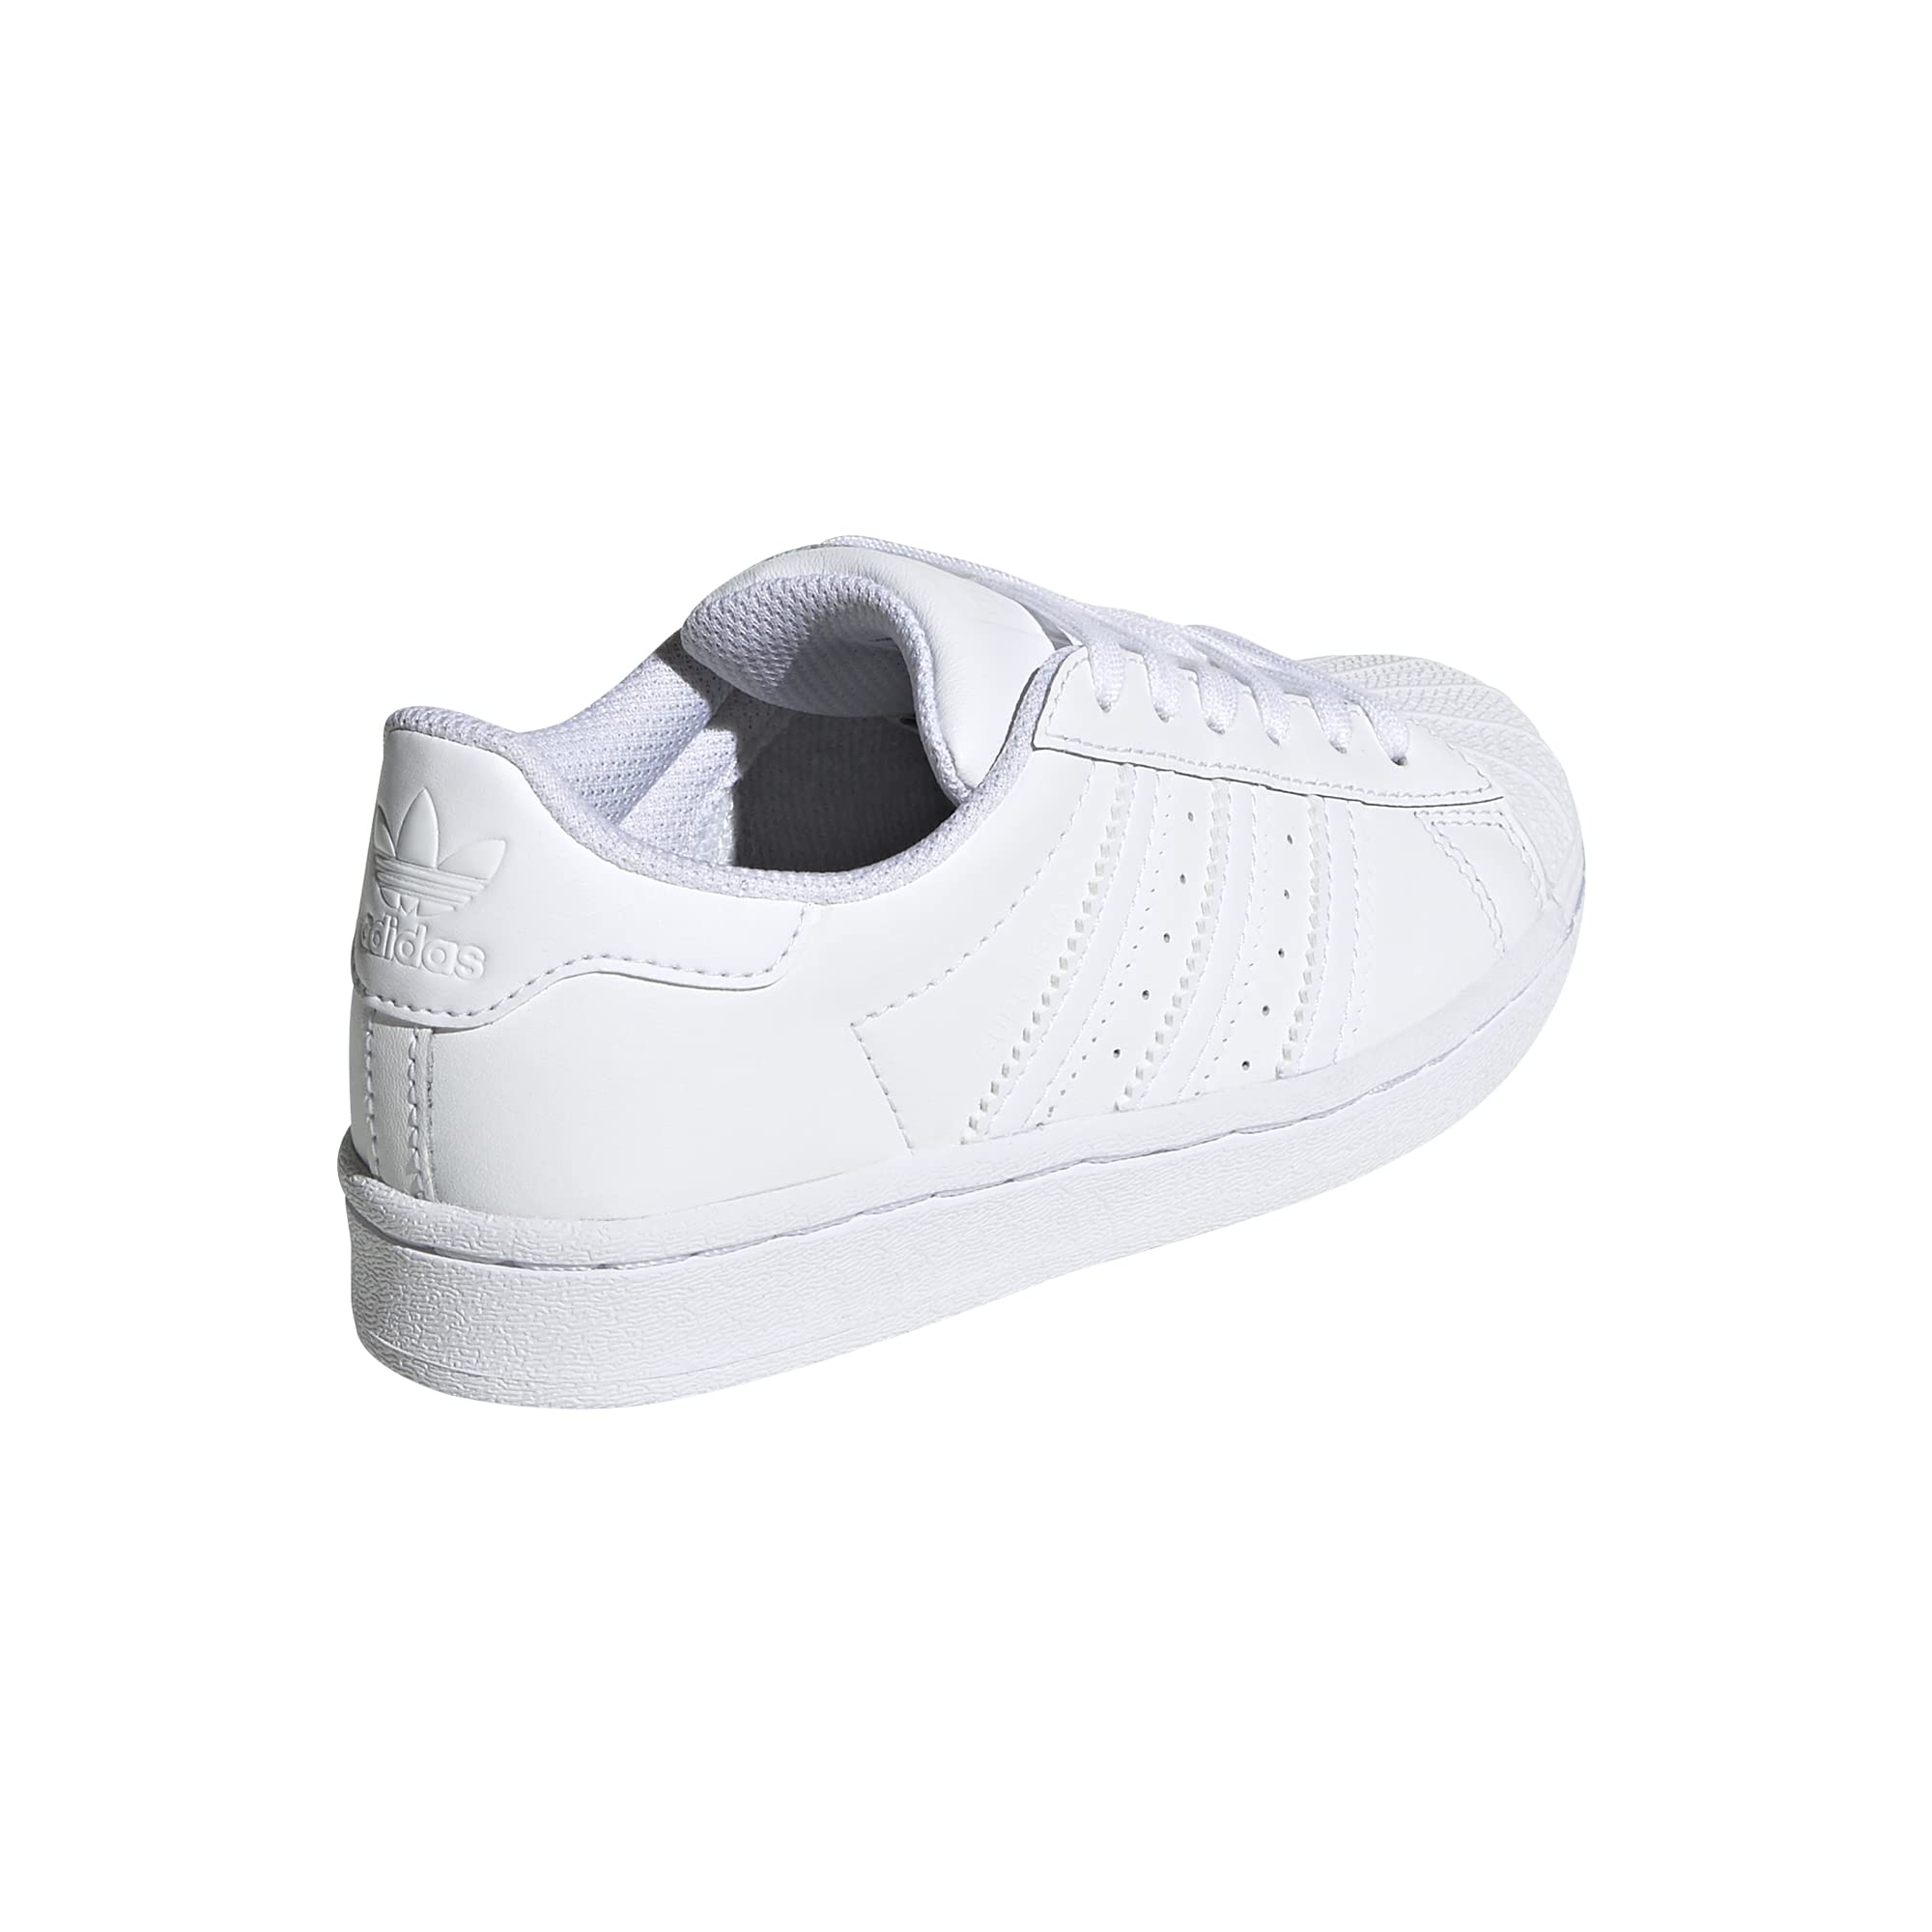 adidas Originals Unisex-Child Superstar Running Shoe